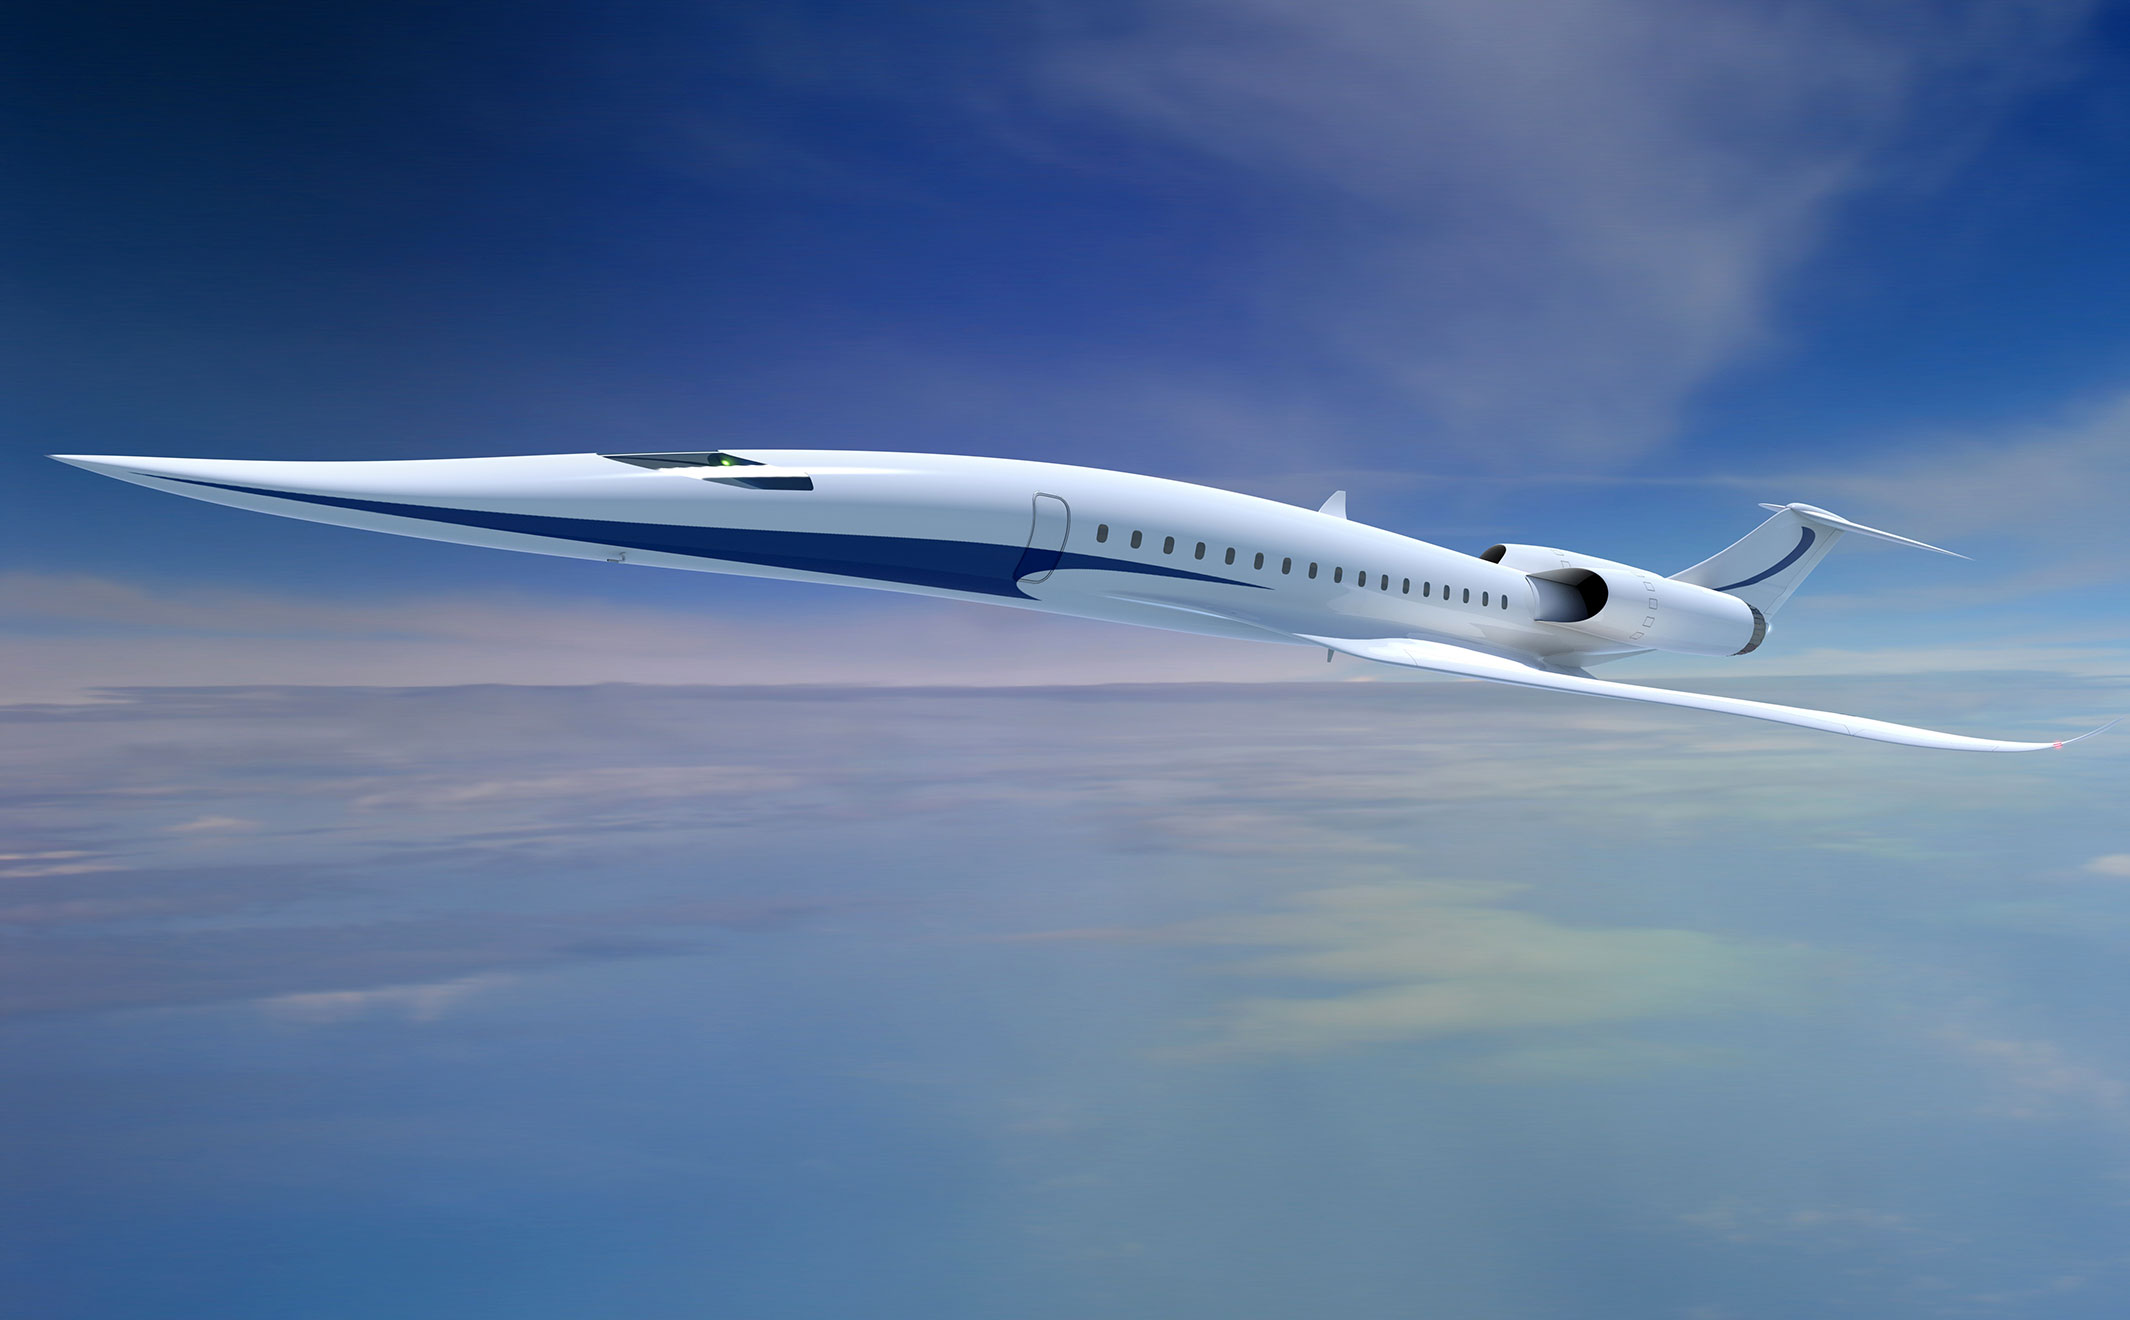 Silent supersonic transport technology